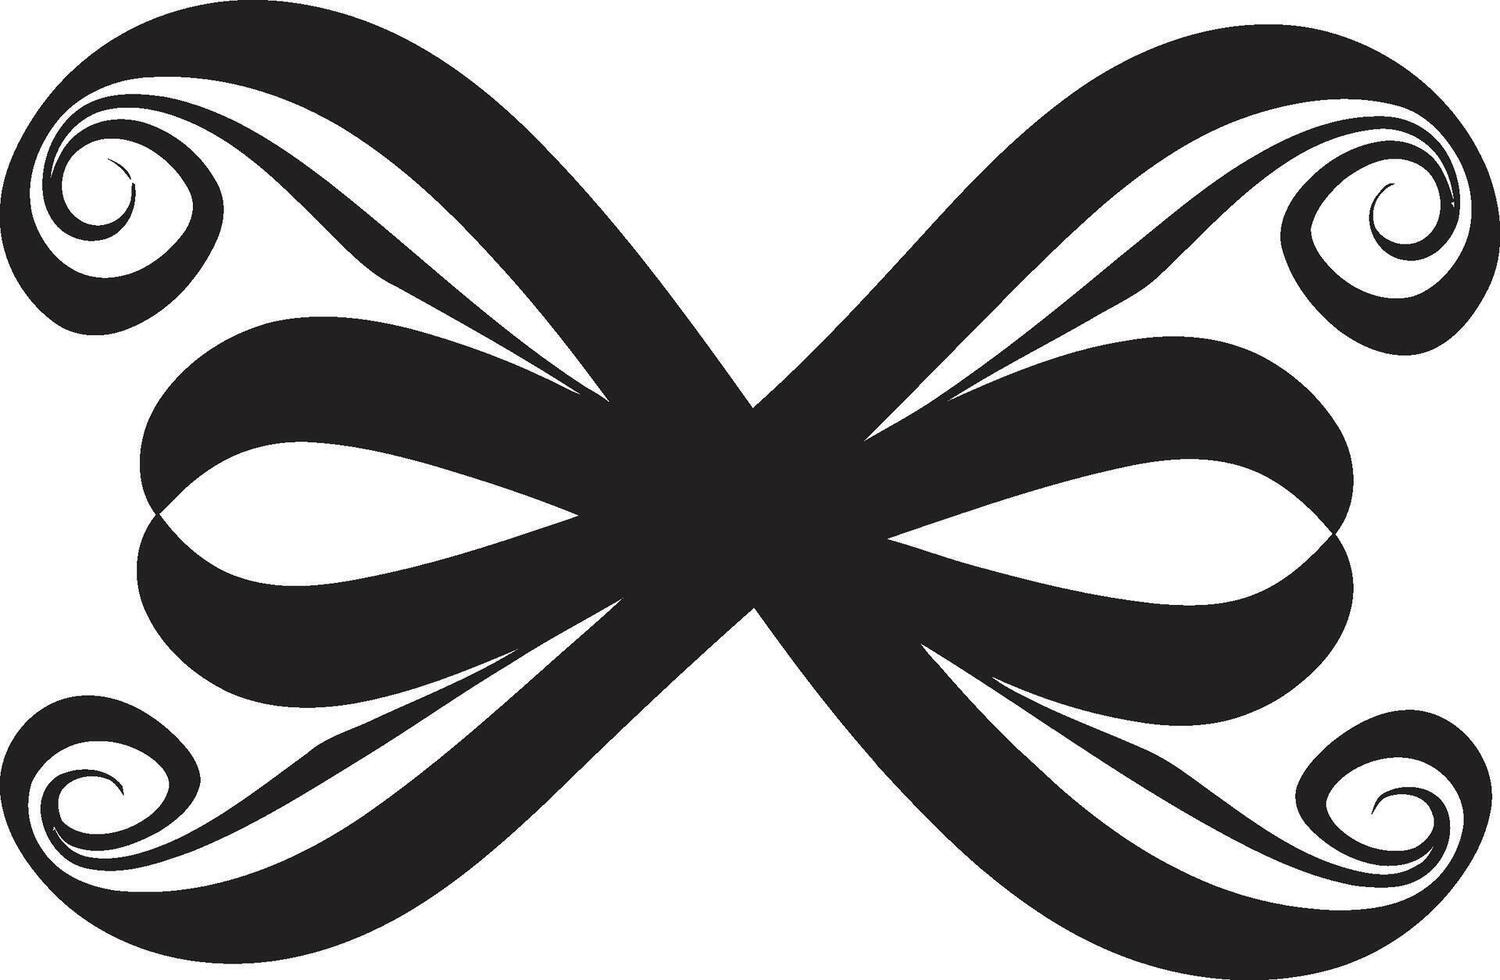 Chic Ribbon Ornamentation Black Elegant Ribbon Spirals Decorative vector